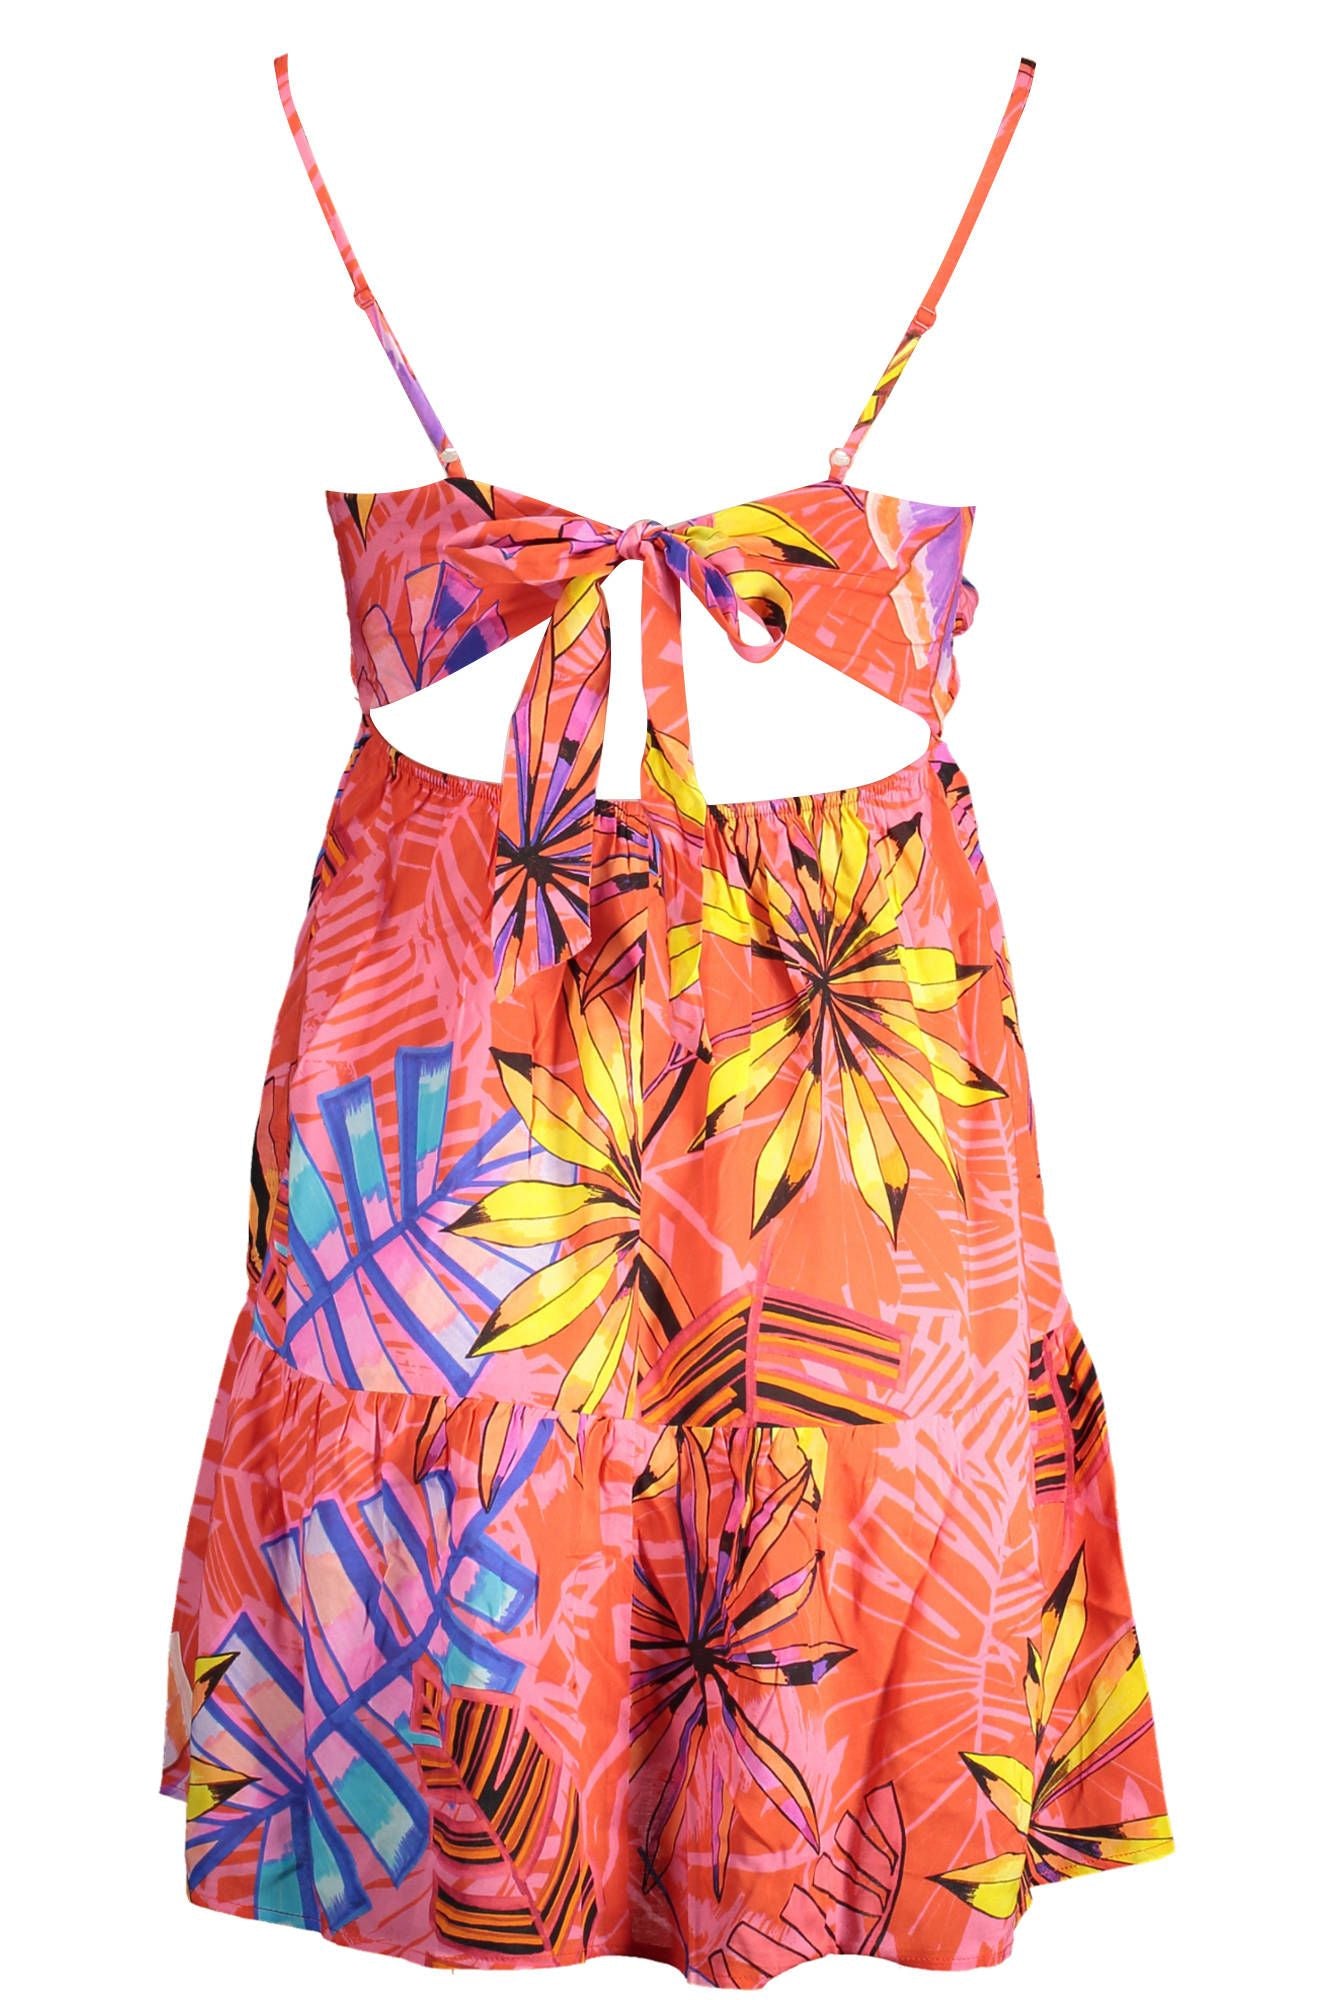 Desigual Radiant Pink Summer Dress with Delicate Details